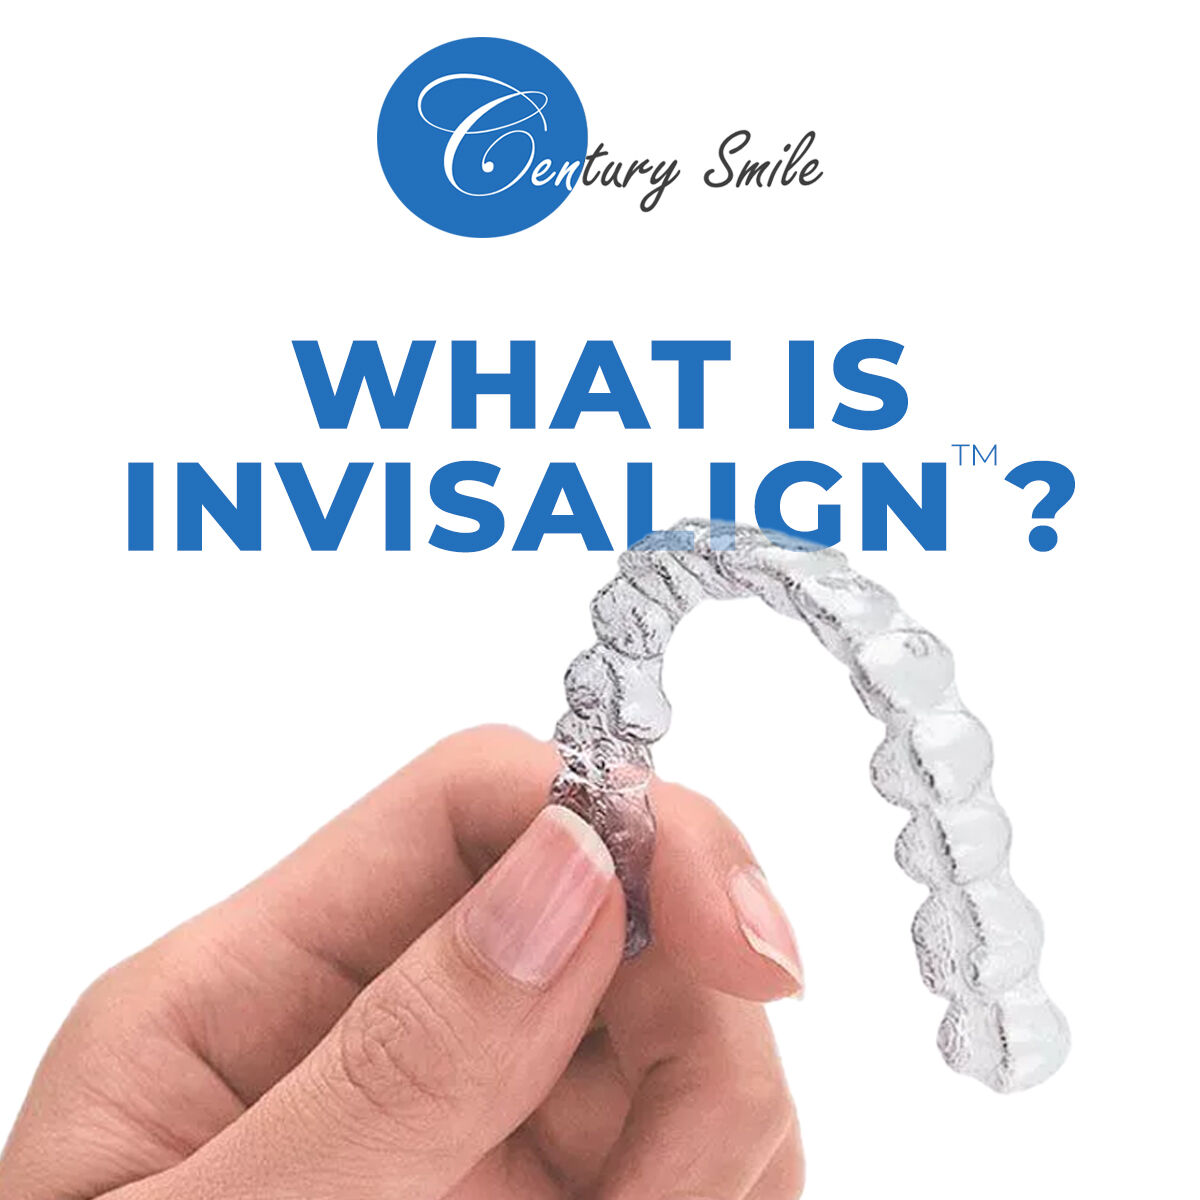 What Is Invisalign? 

#invisalign #braces #dentalimplants #teethwhitening #toothextraction #dentalexam #teethcleaning #rootcanal #wisdomteethremoval #dentist #DrMaryamTalaie #CenturySmileDental